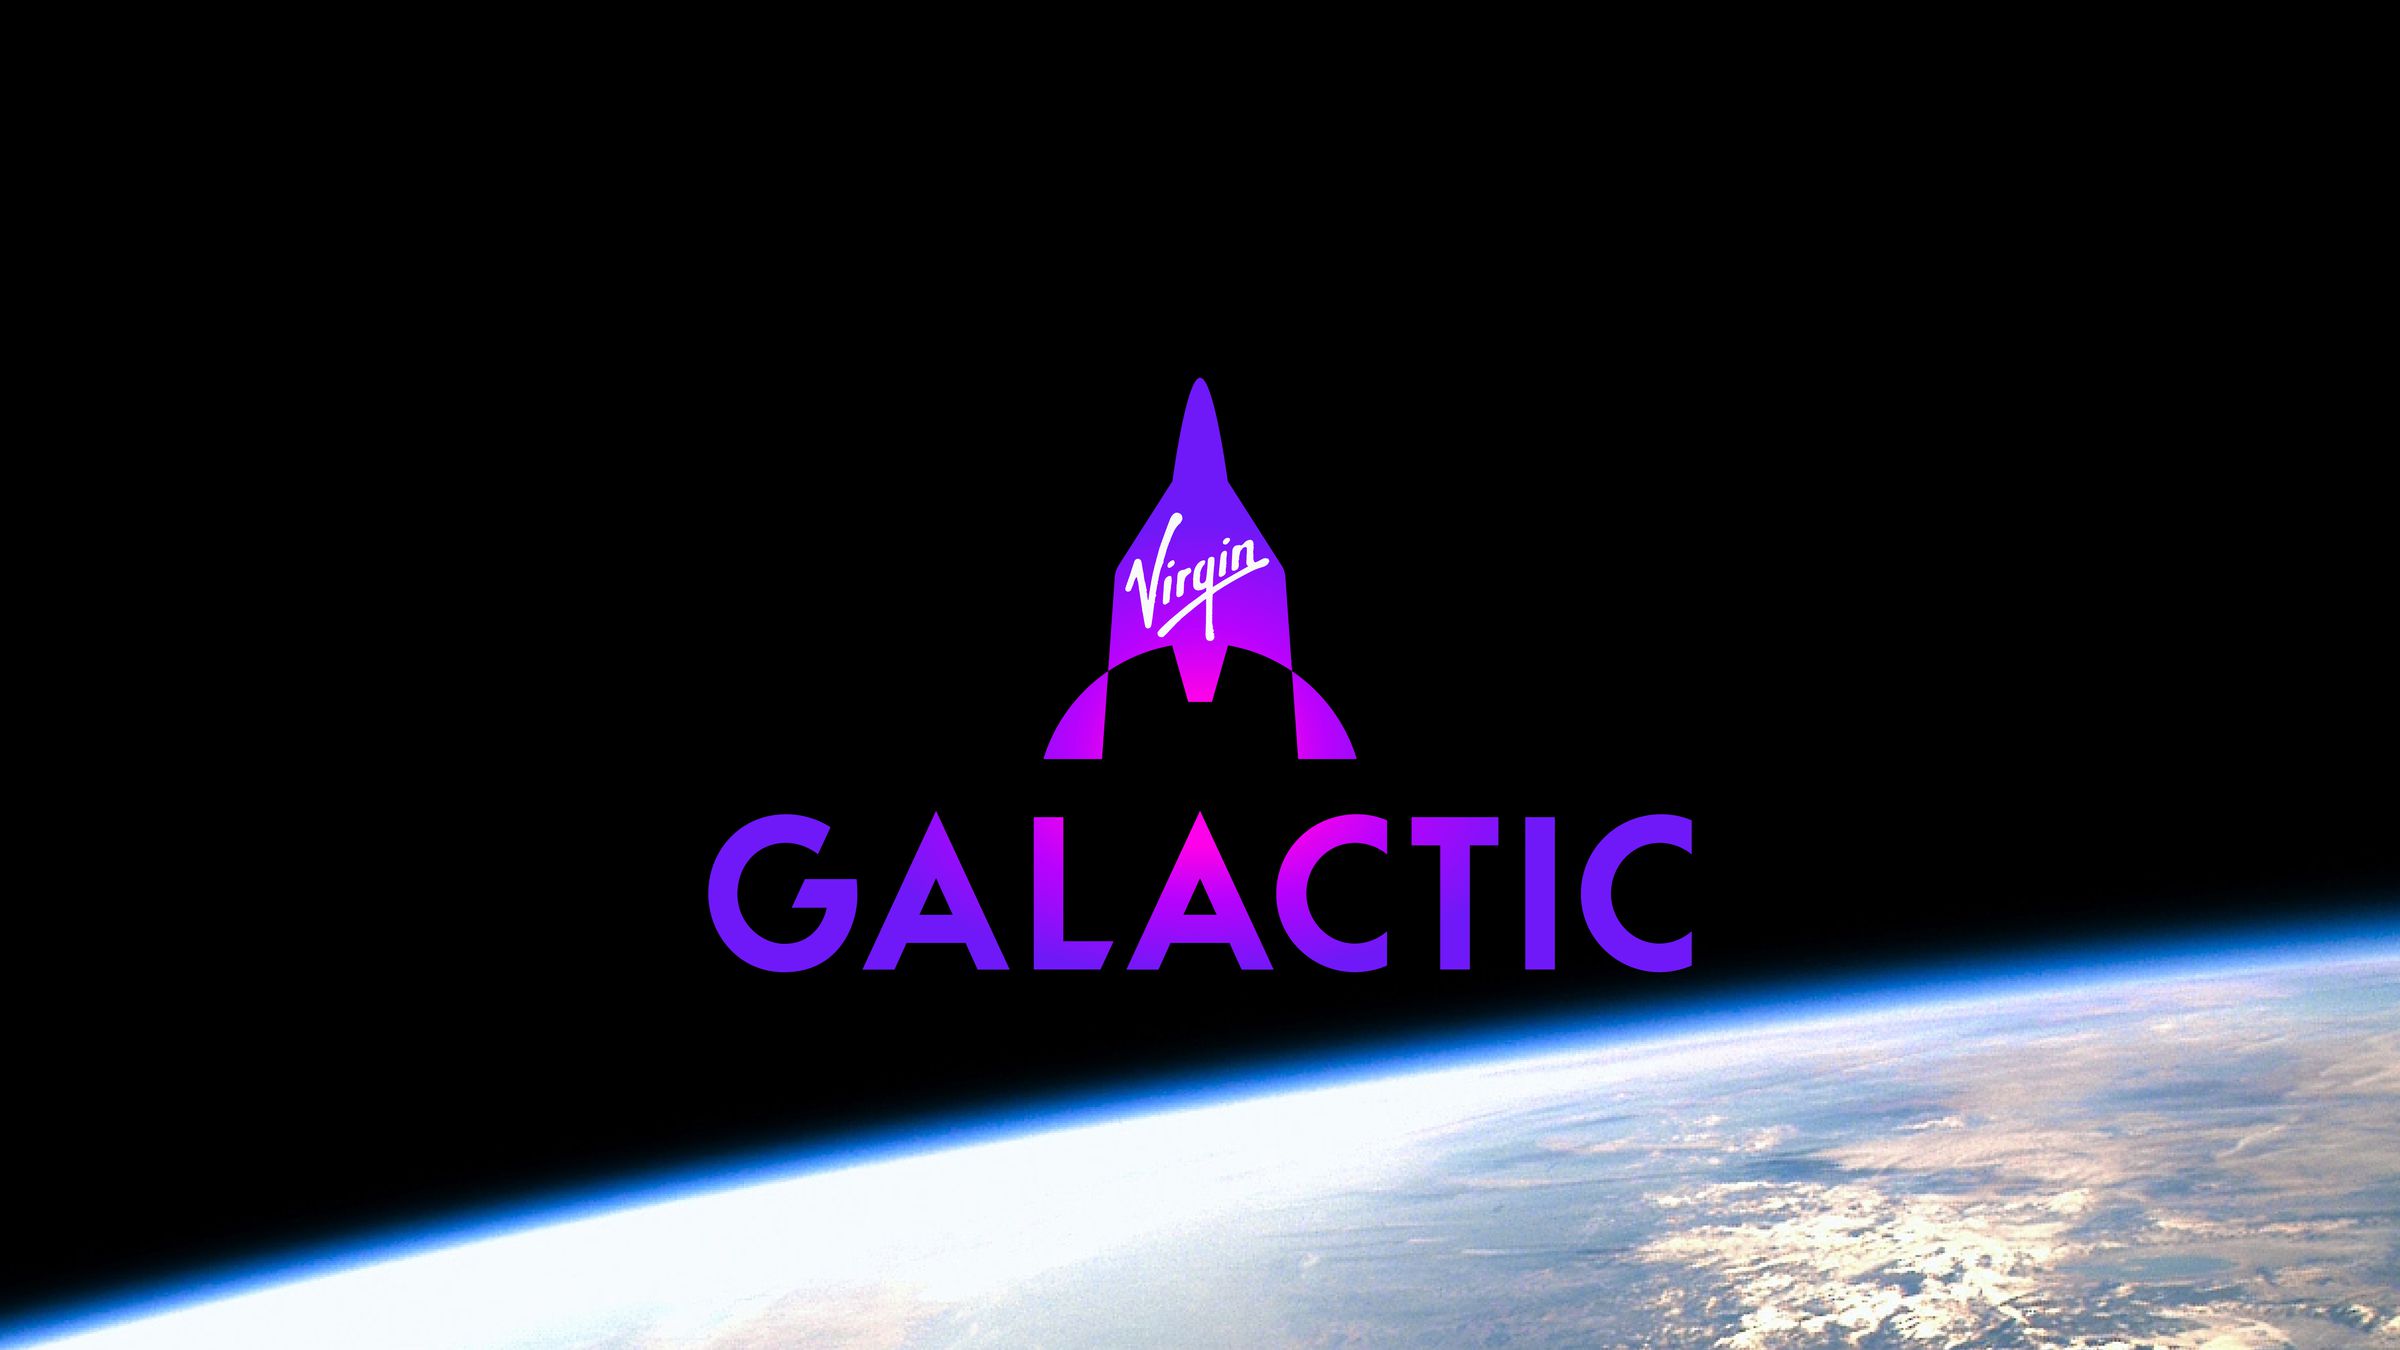 Virgin Galactic’s new logo